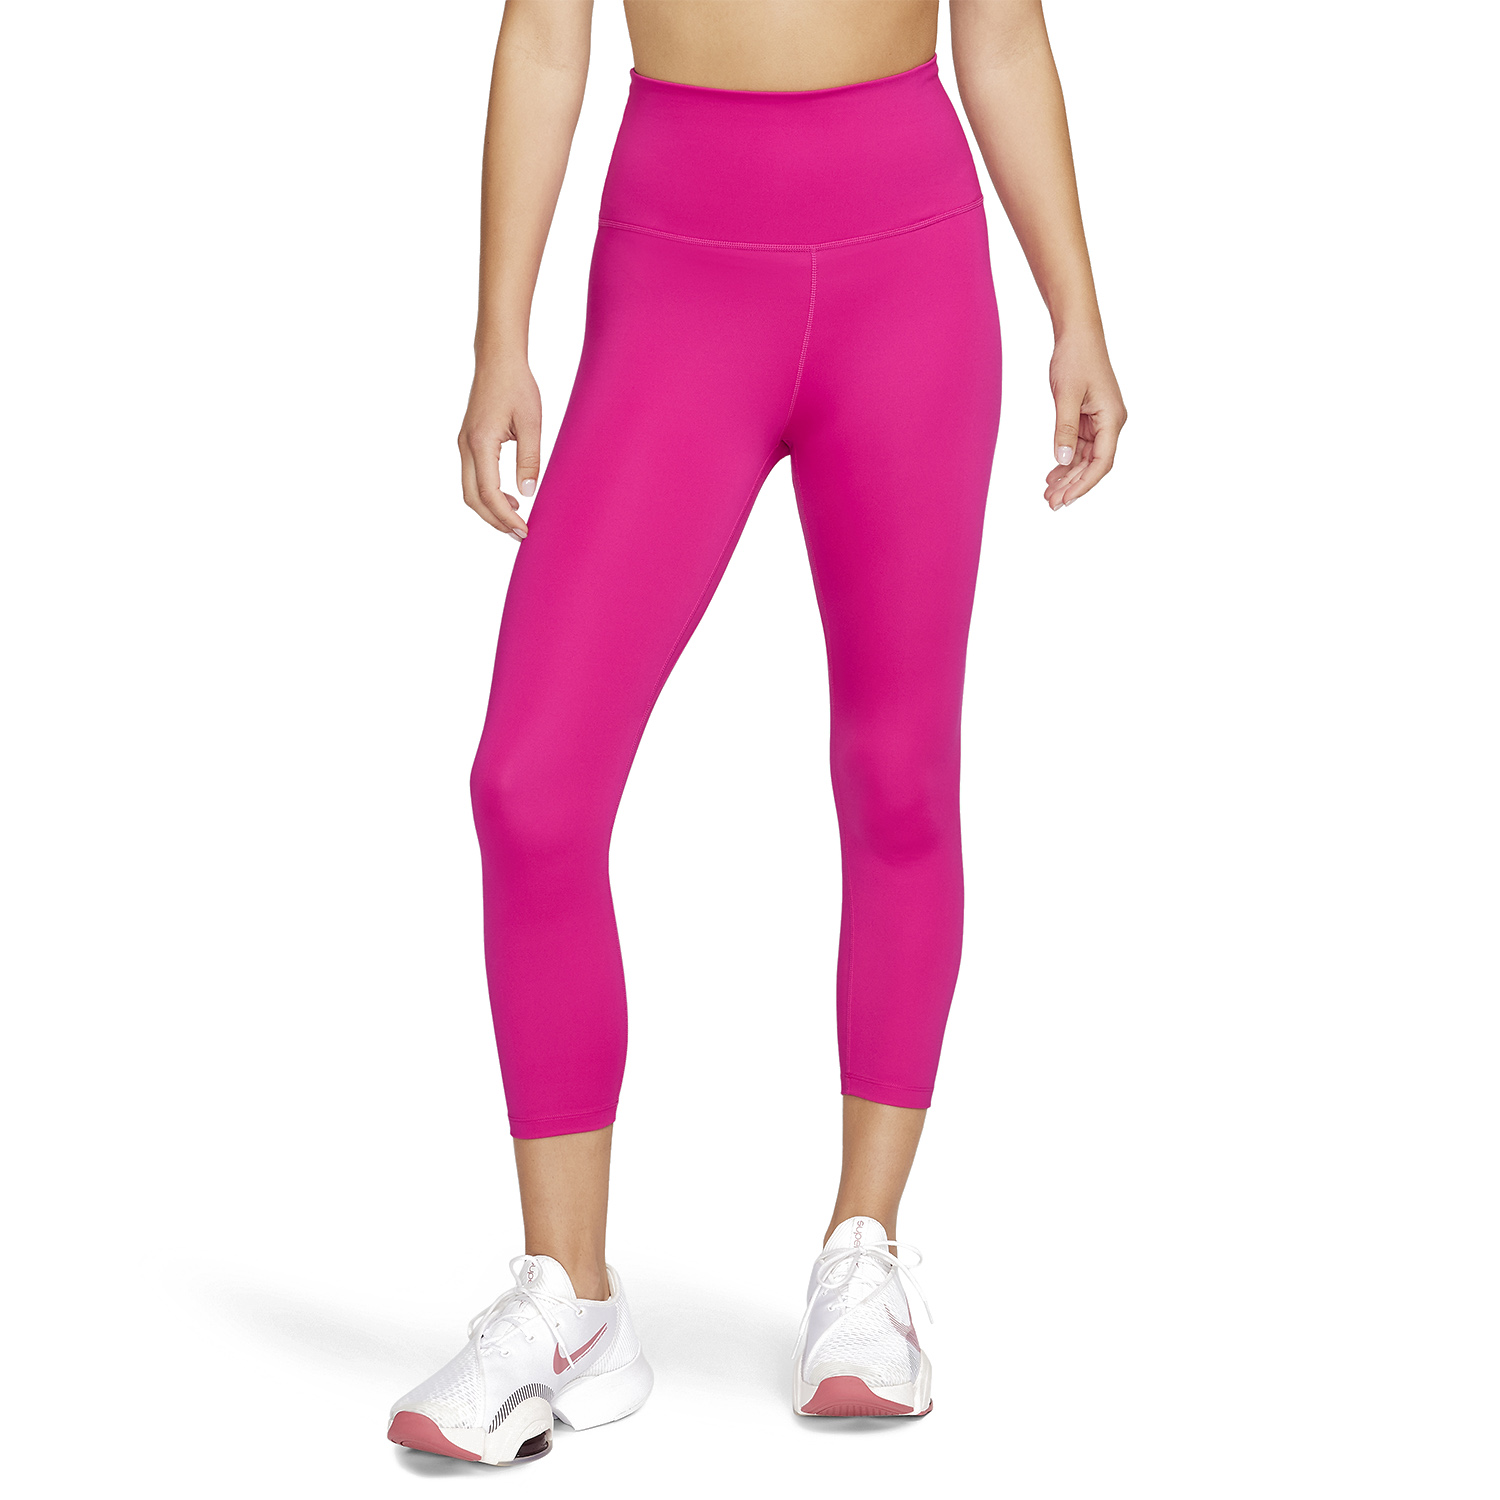 Nike One 7/8 Women's Training Tights - Fireberry/White